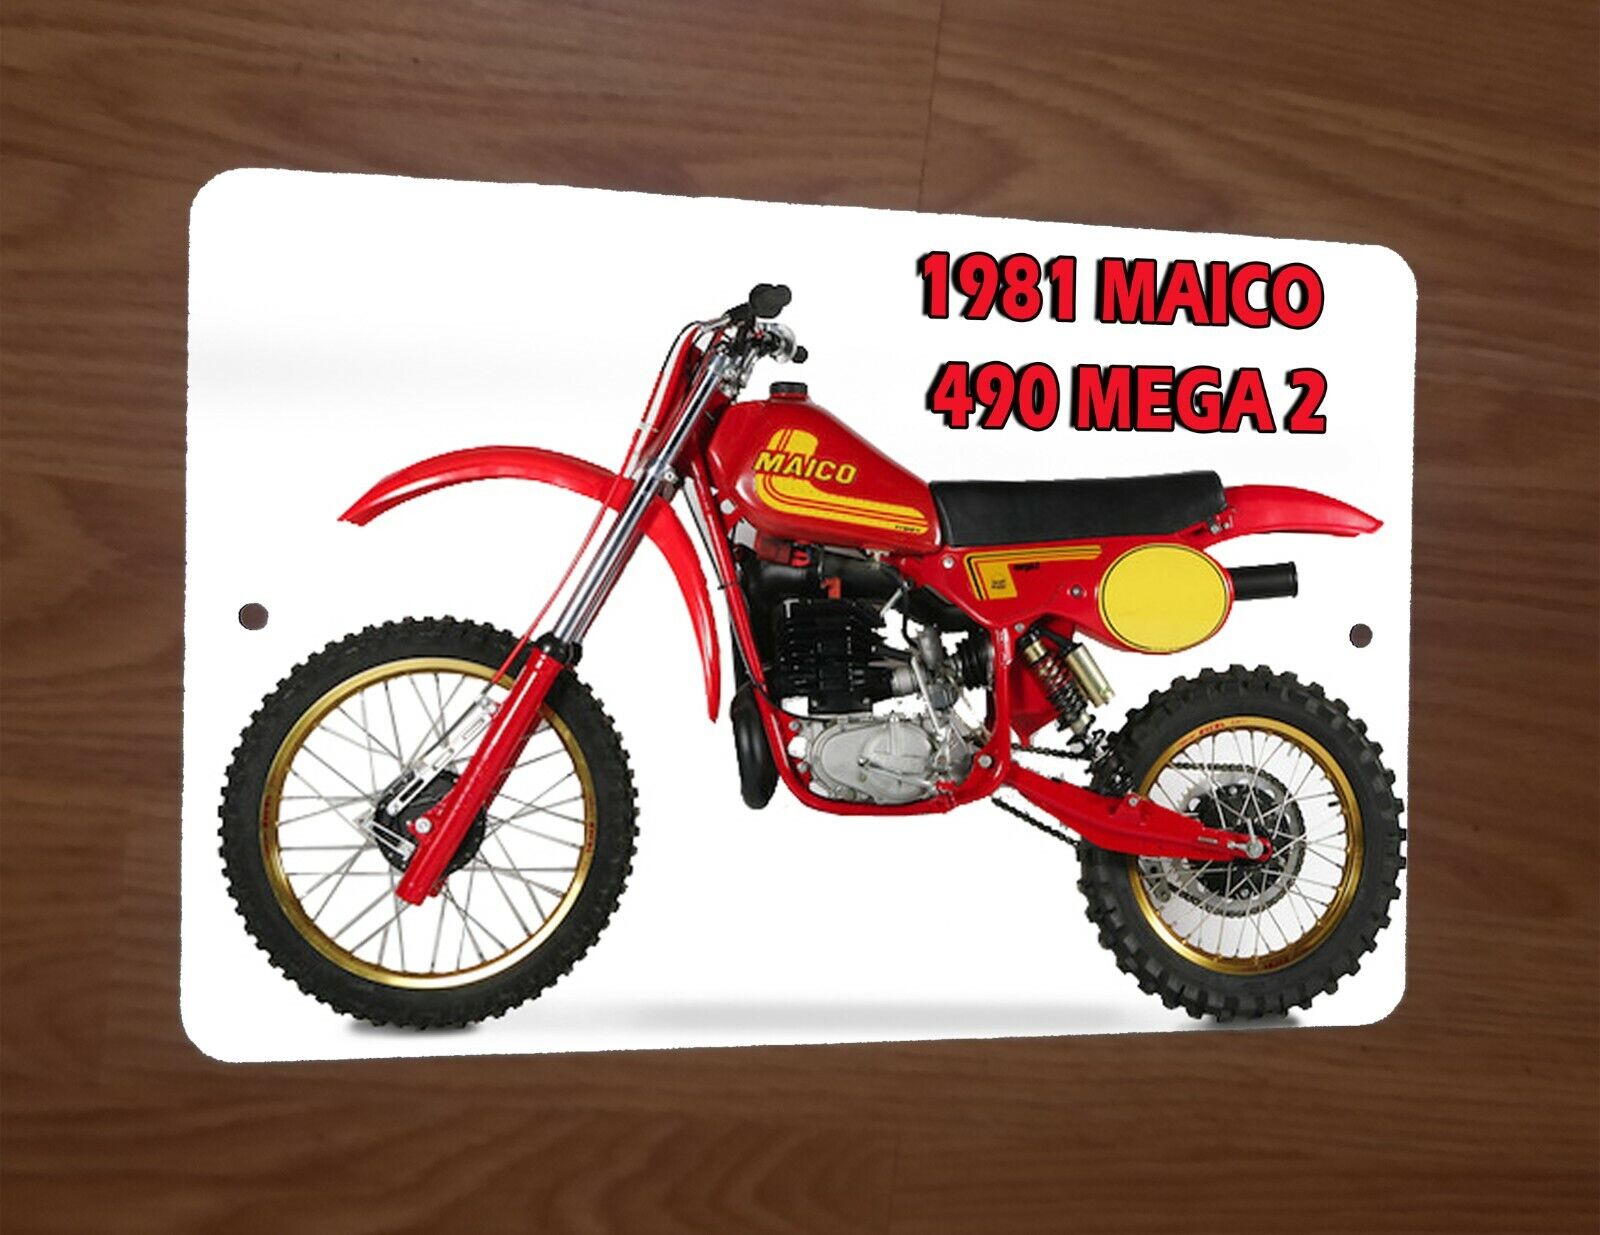 1981 MAICO 490 MEGA 2 Dirt Bike Motocross Motorcycle Photo 8x12 Metal Wall Sign